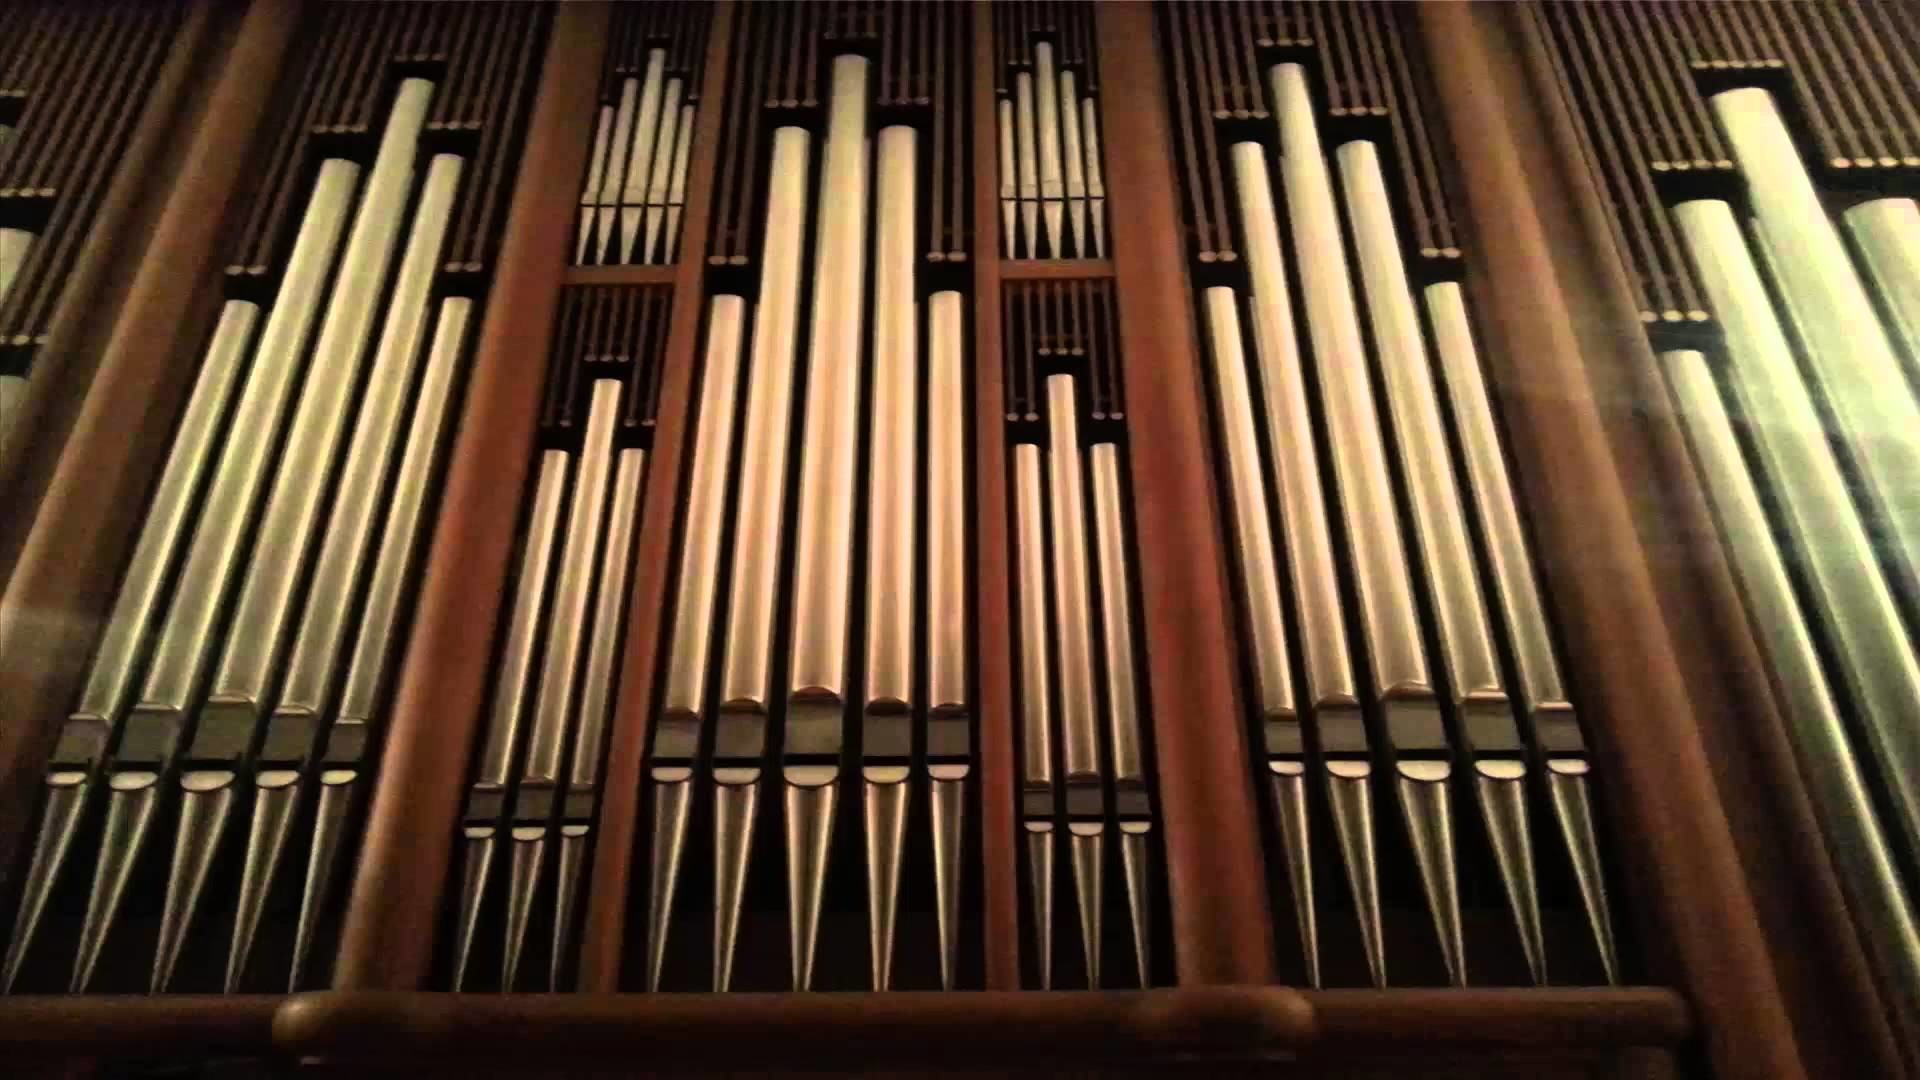 1920x1080 Tetris Theme on Church Organ [HD]